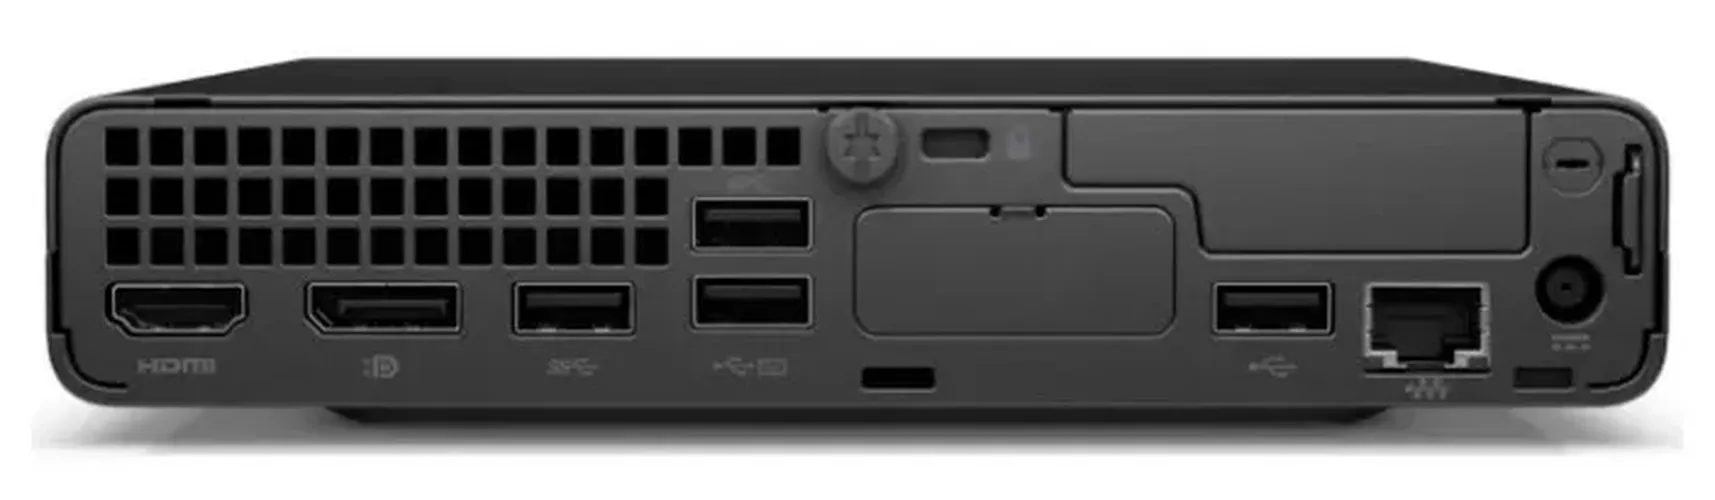 Мини ПК HP Pro Deck 400 G9|  i5-12 Gen| 8Gb DDR4| SSD 256Gb| PSU, Черный, купить недорого